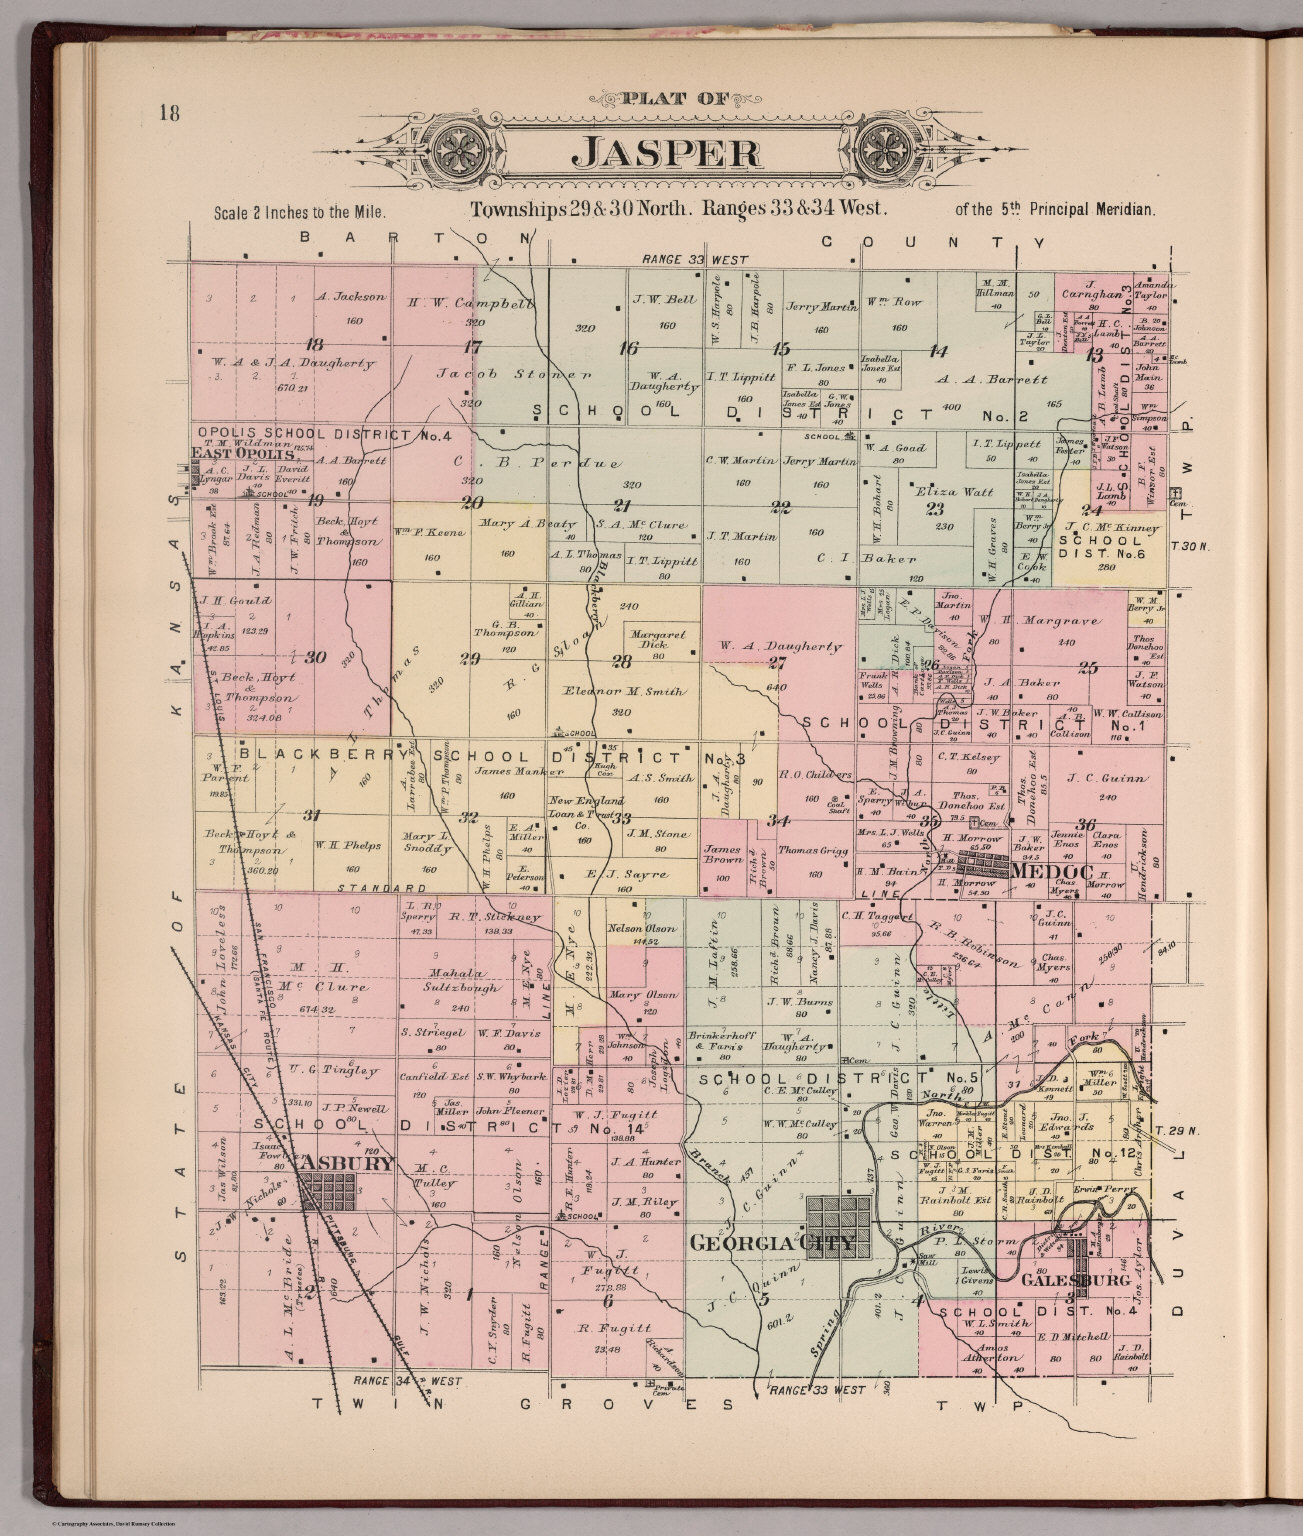 Plat of Jasper, Missouri. David Rumsey Historical Map Collection